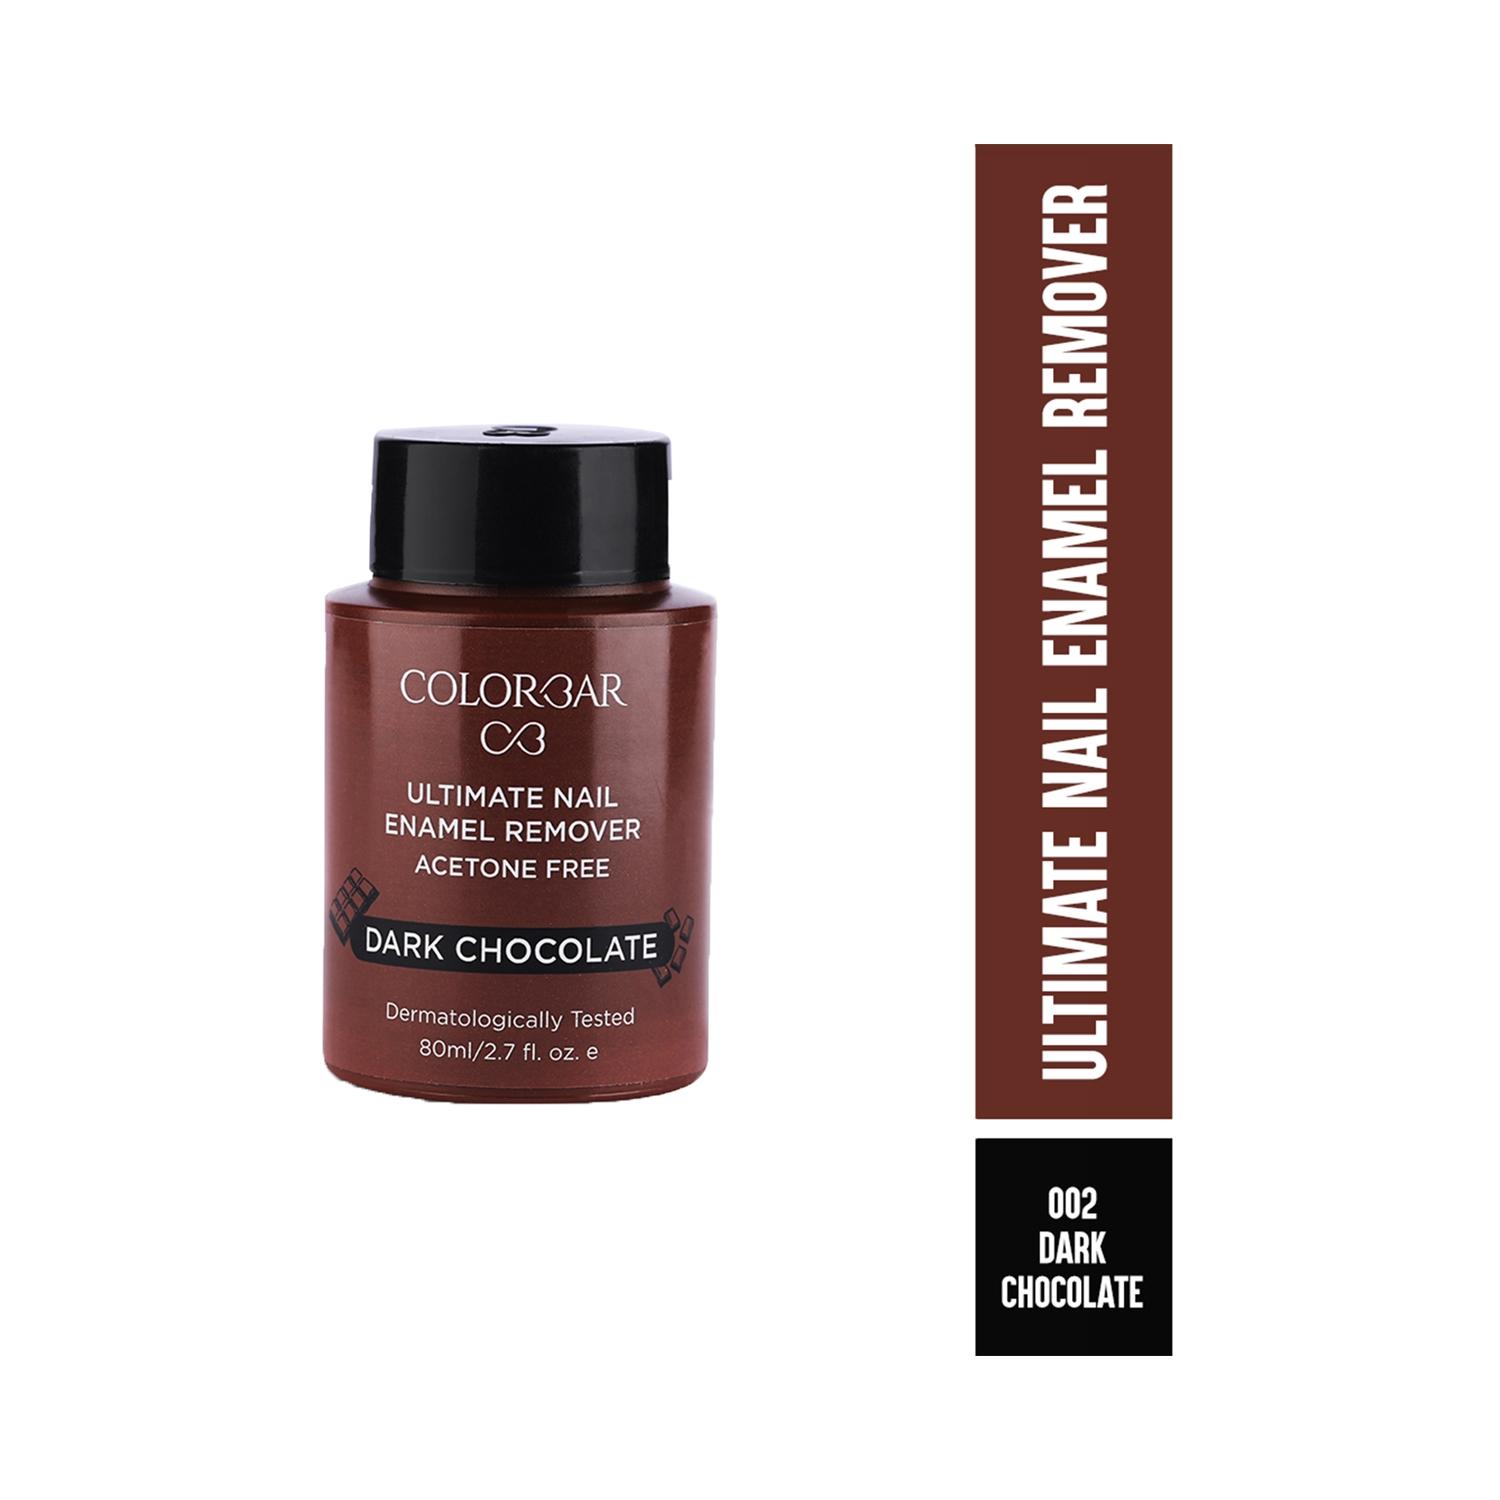 colorbar ultimate nail enamel remover - 002 dark chocolate (80 ml)